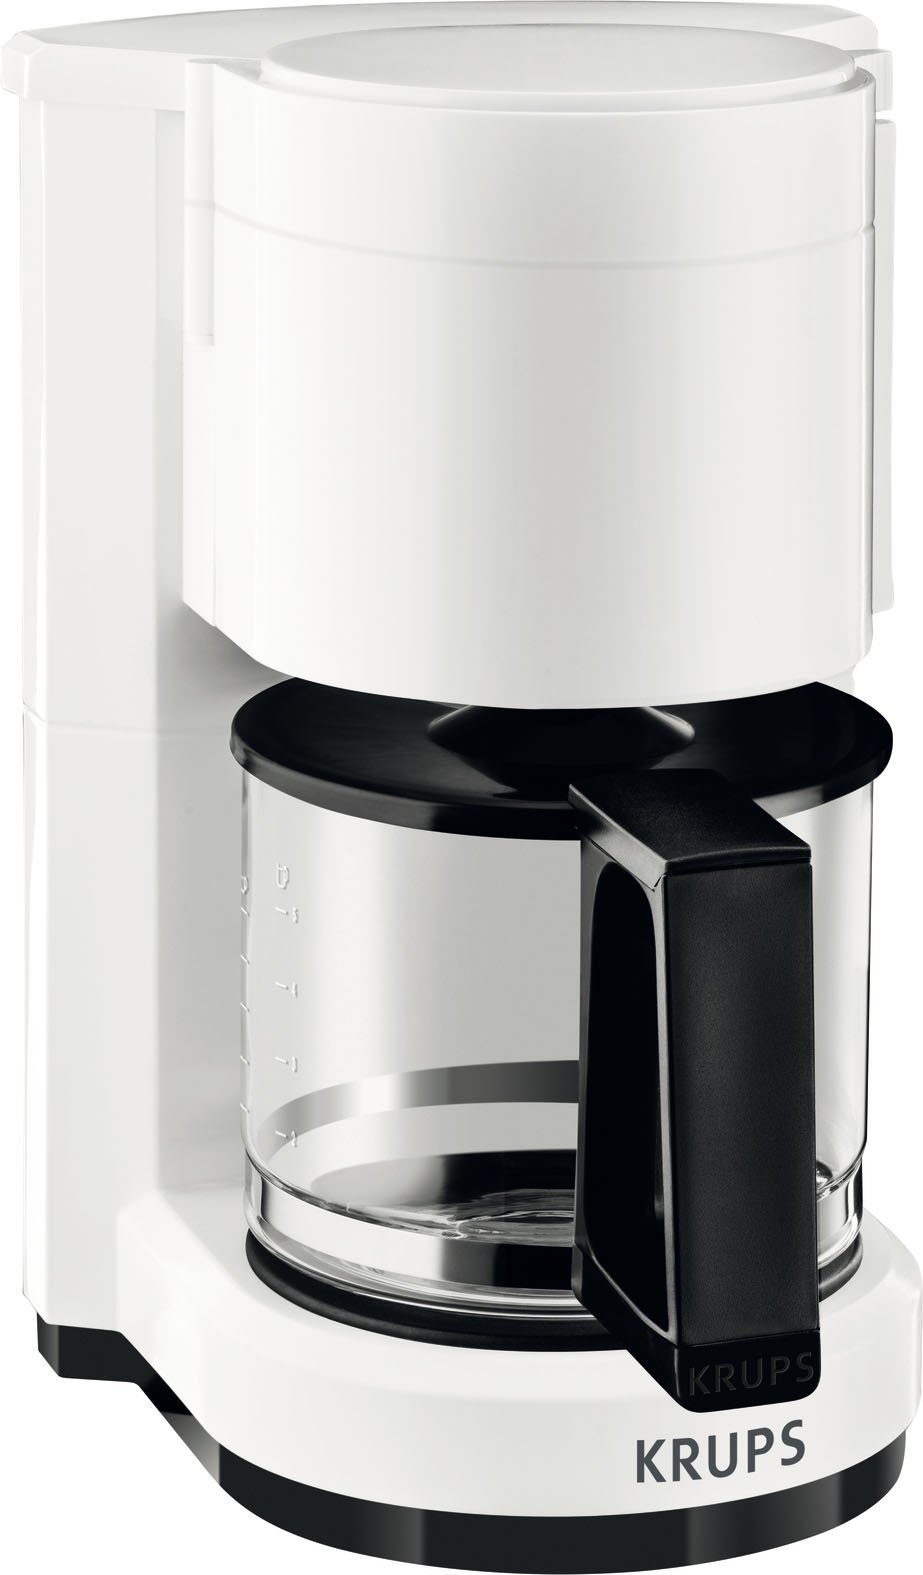 Krups Filterkaffeemaschine F18301 5-7 Filterhalter, Kaffee, Kaffeekanne, für 0,6l Aromacafe, Tassen Warmhaltefunktion herausnehmbarer